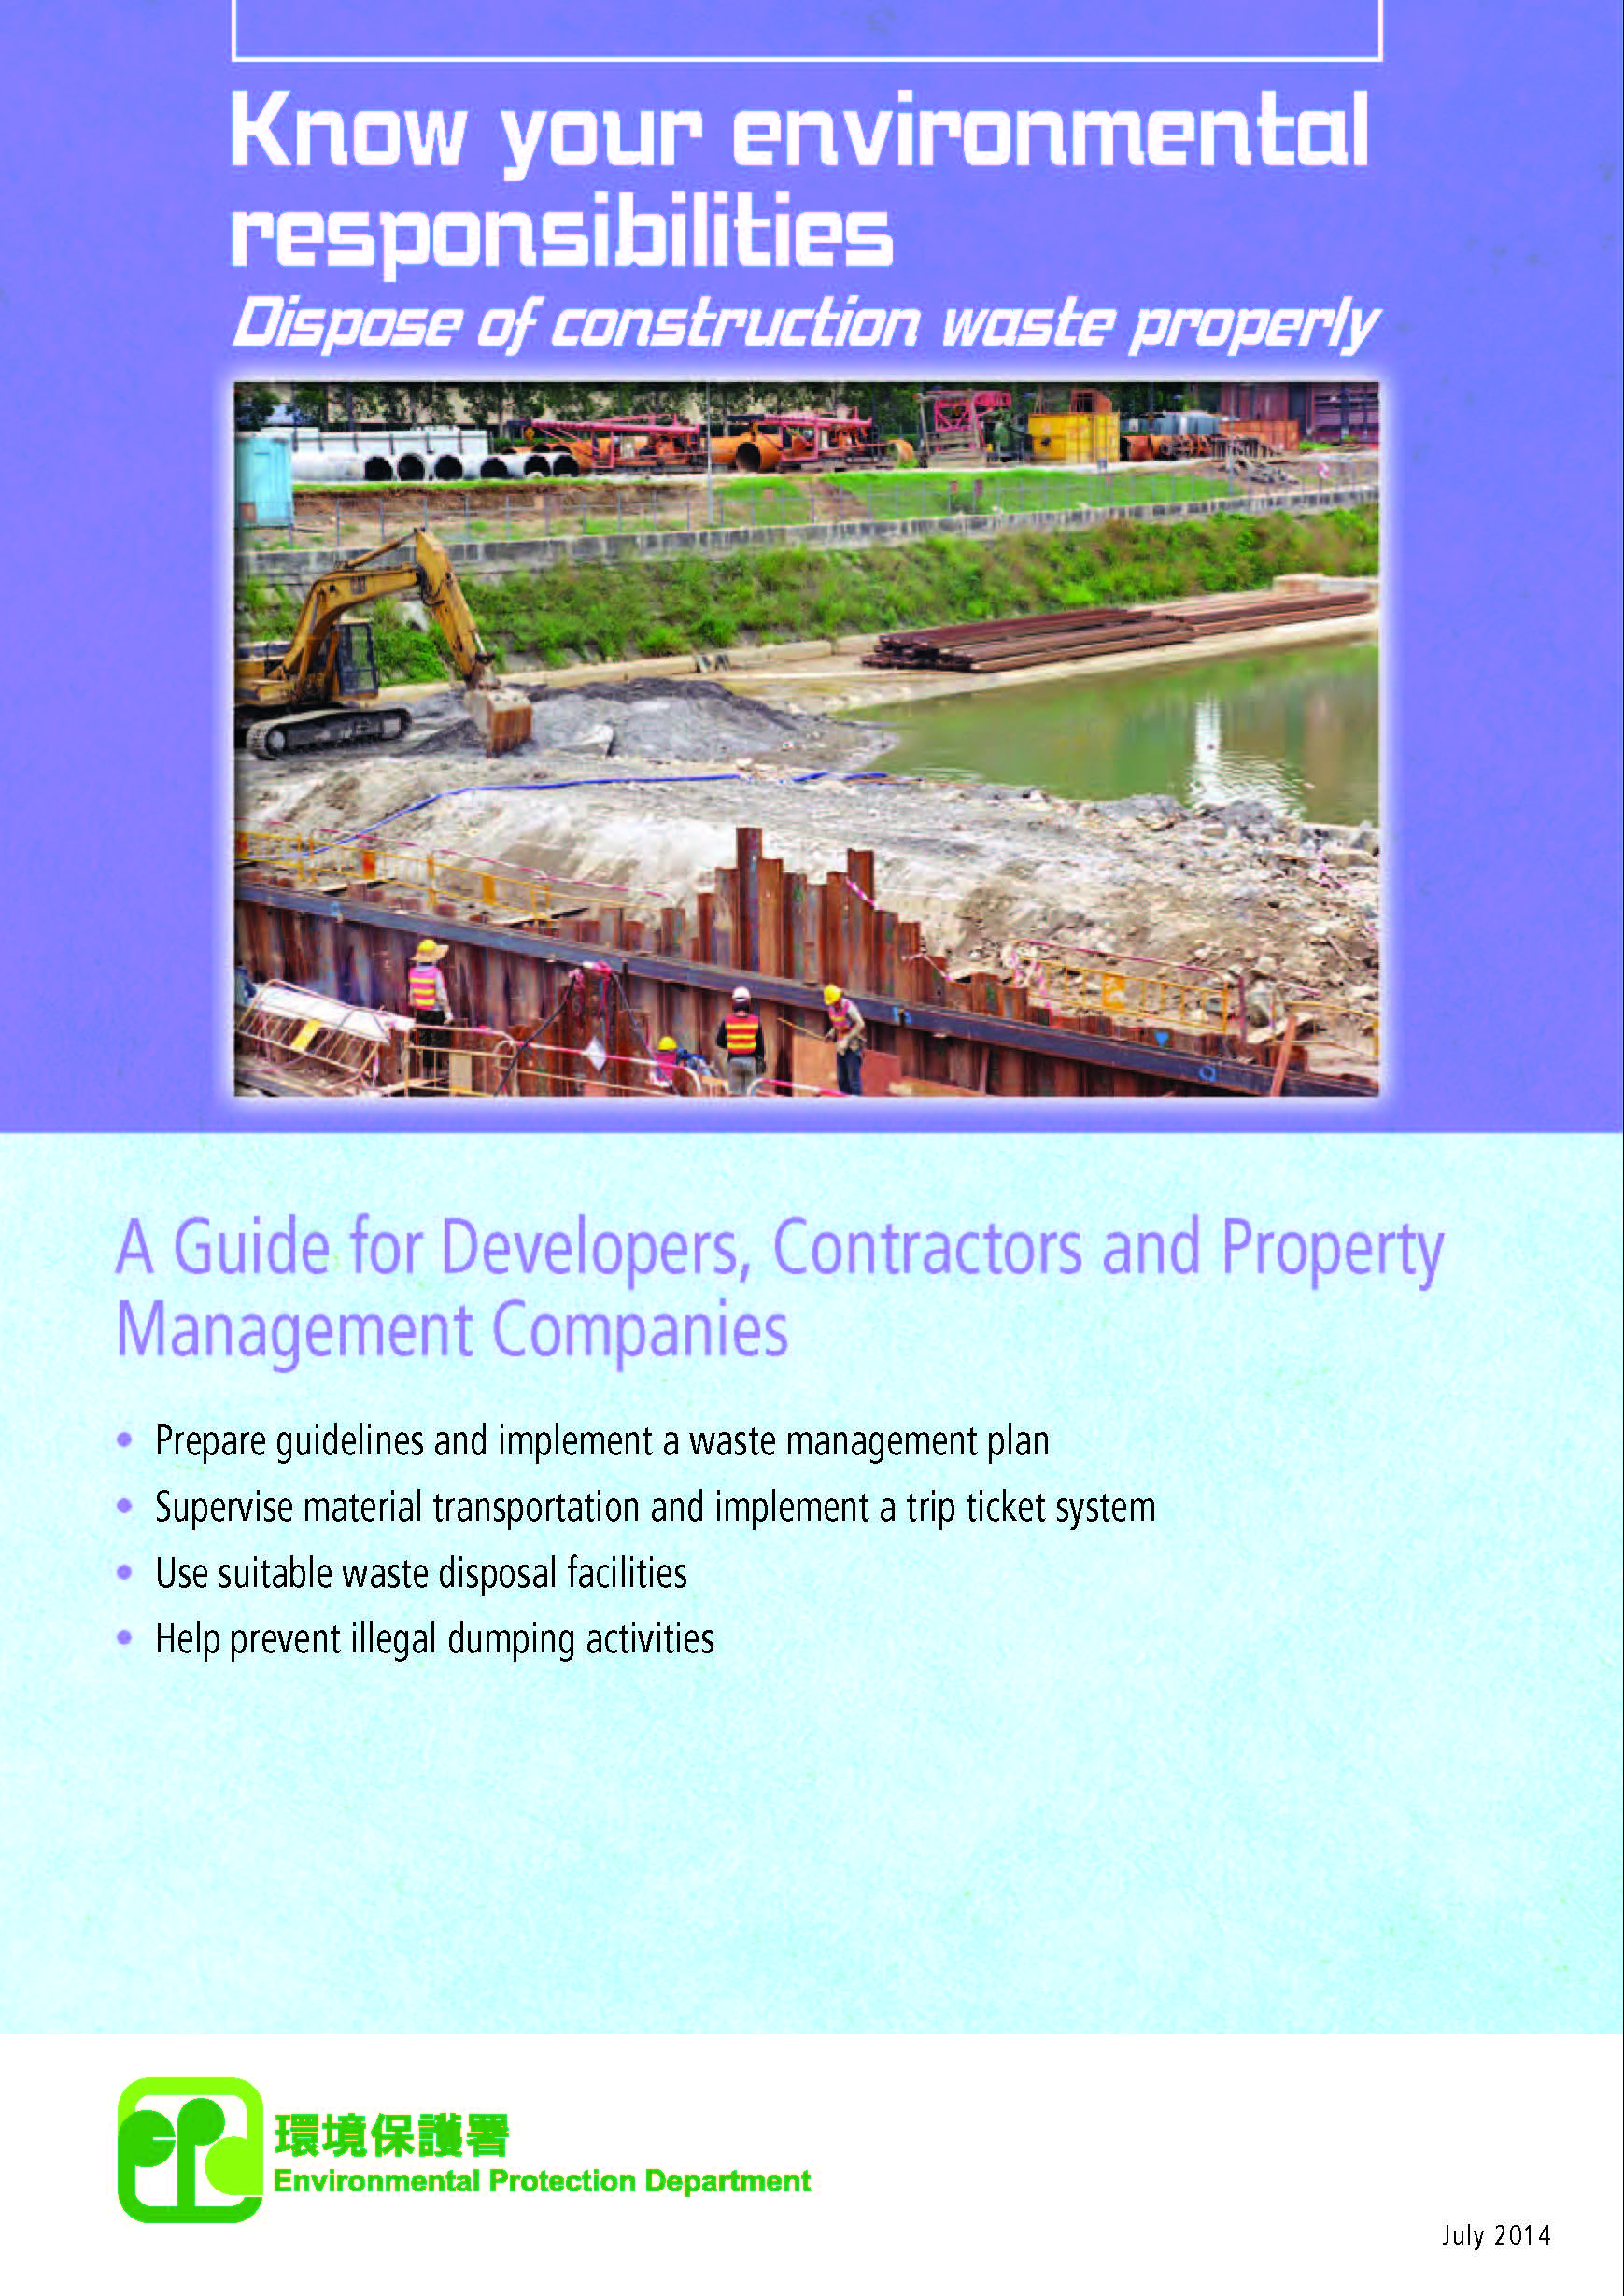 Leaflet for Contractors